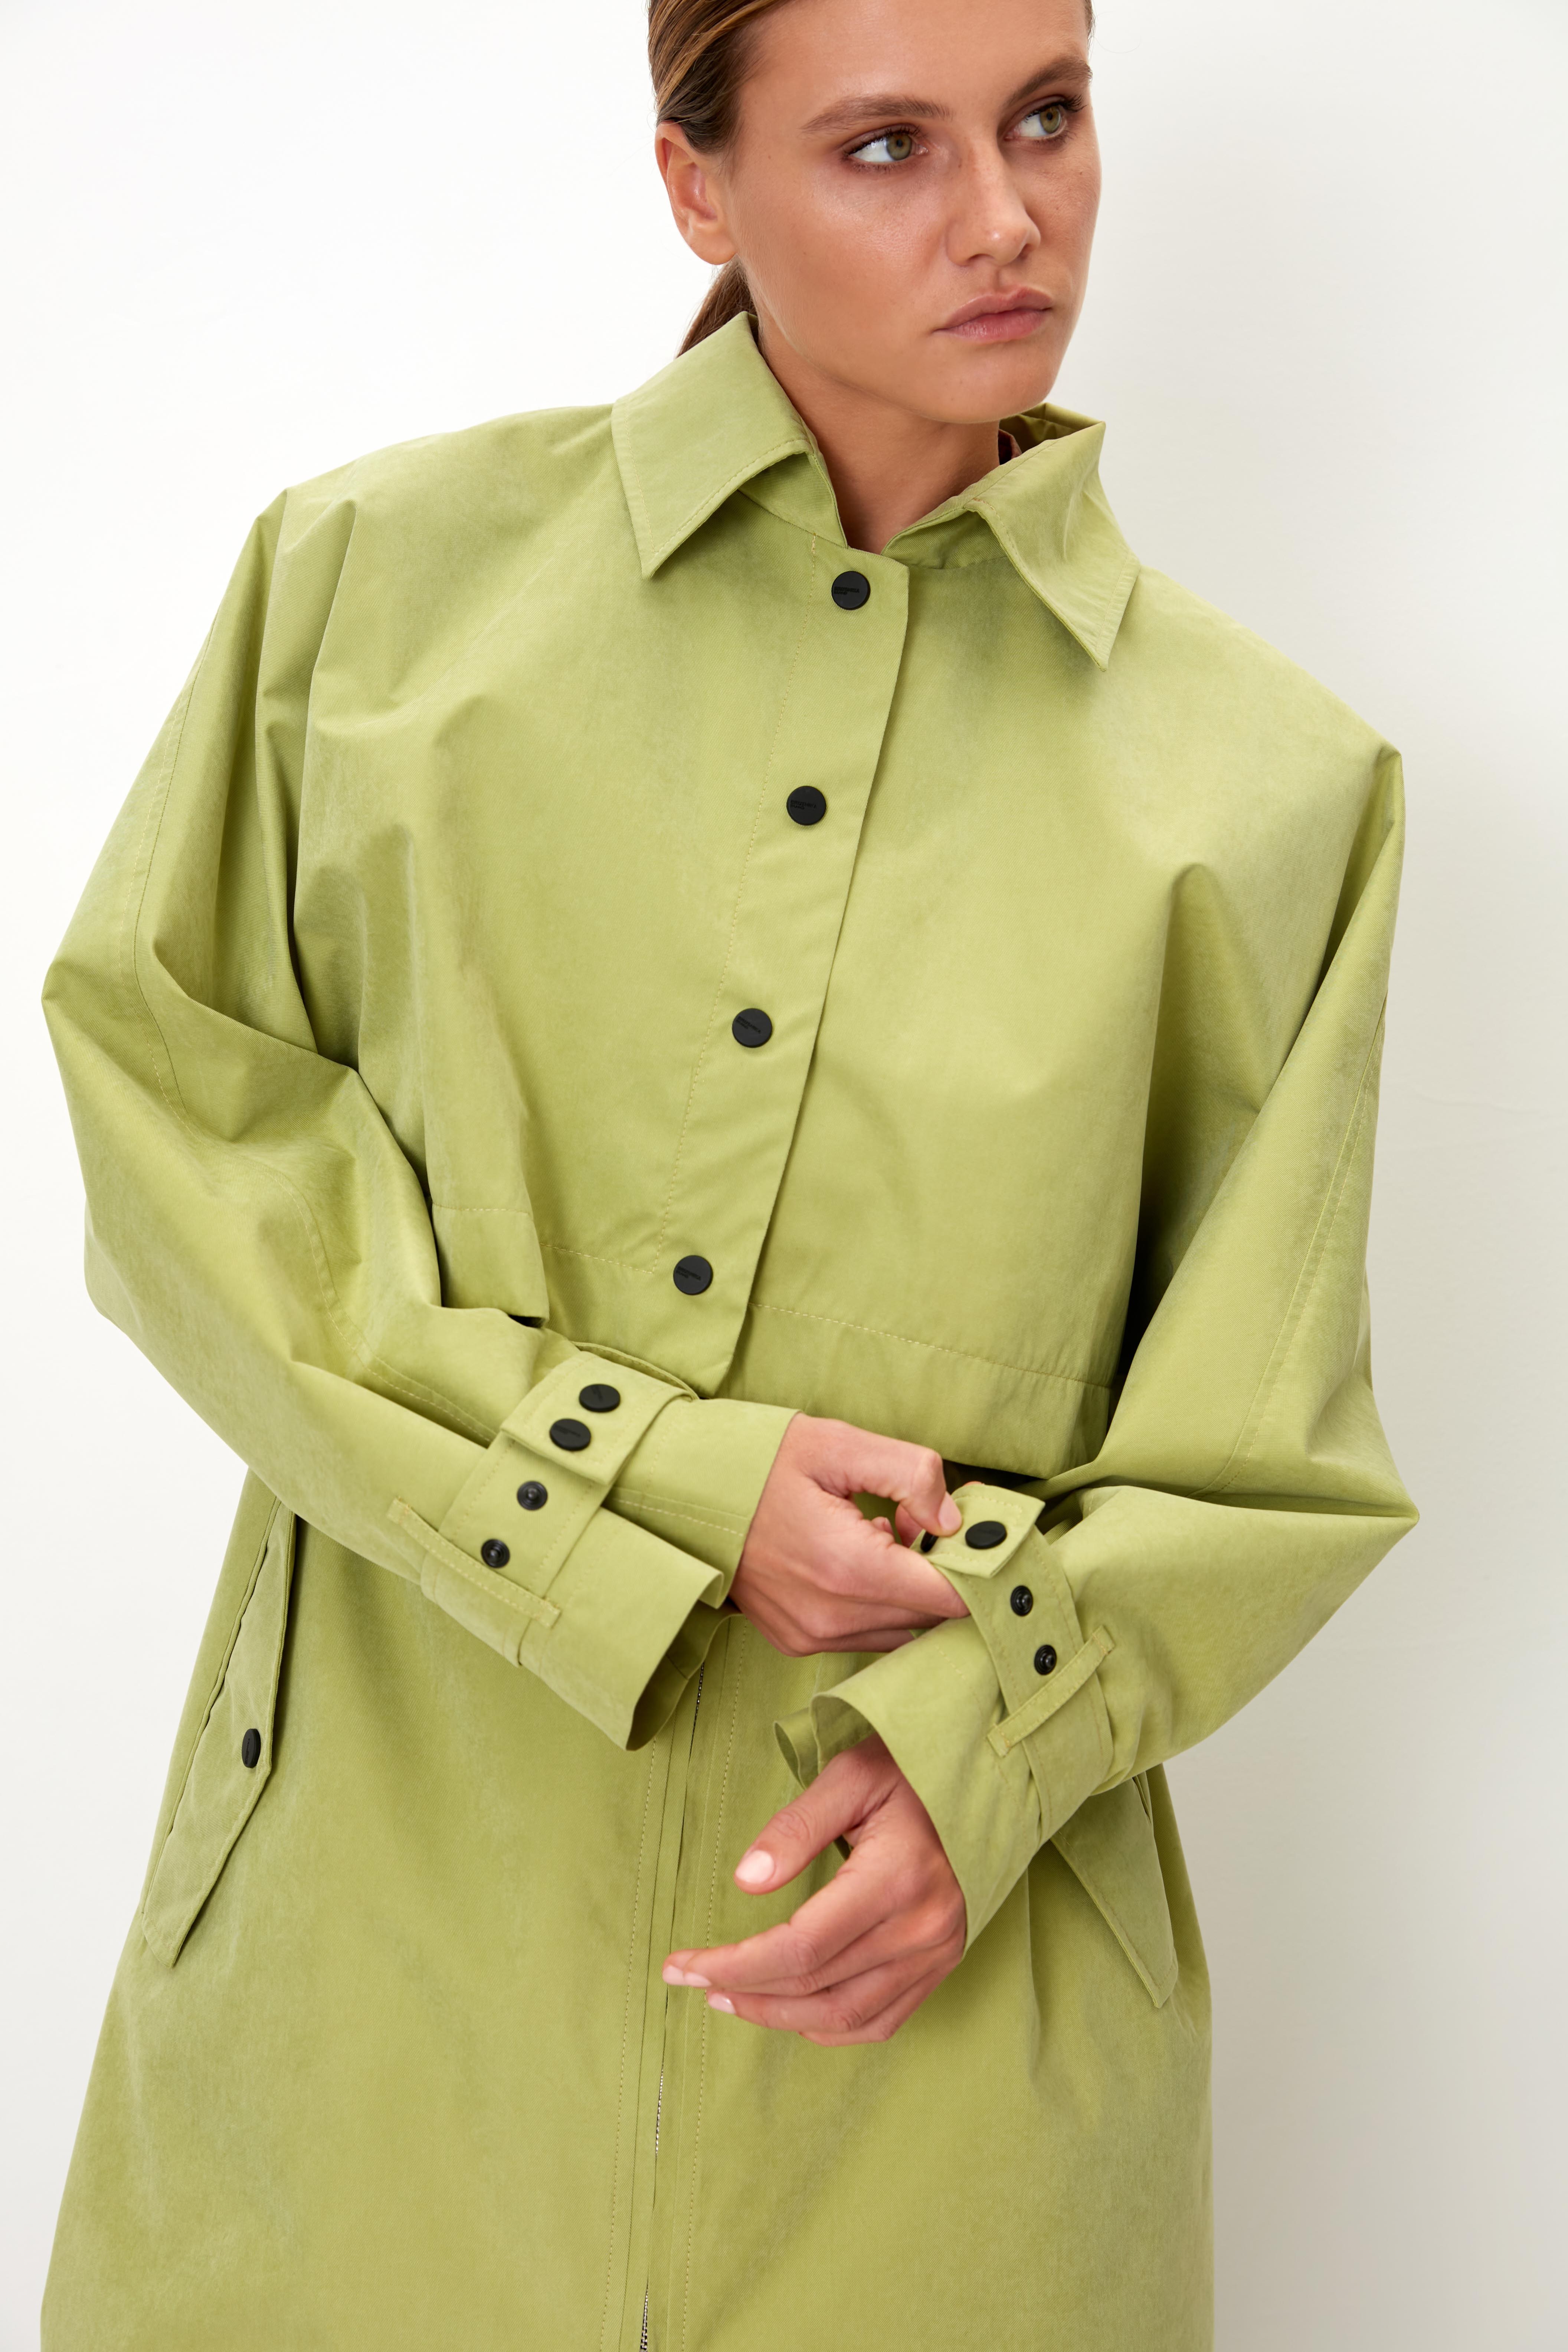 Cloak 4204-08 Green from BRUSNiKA